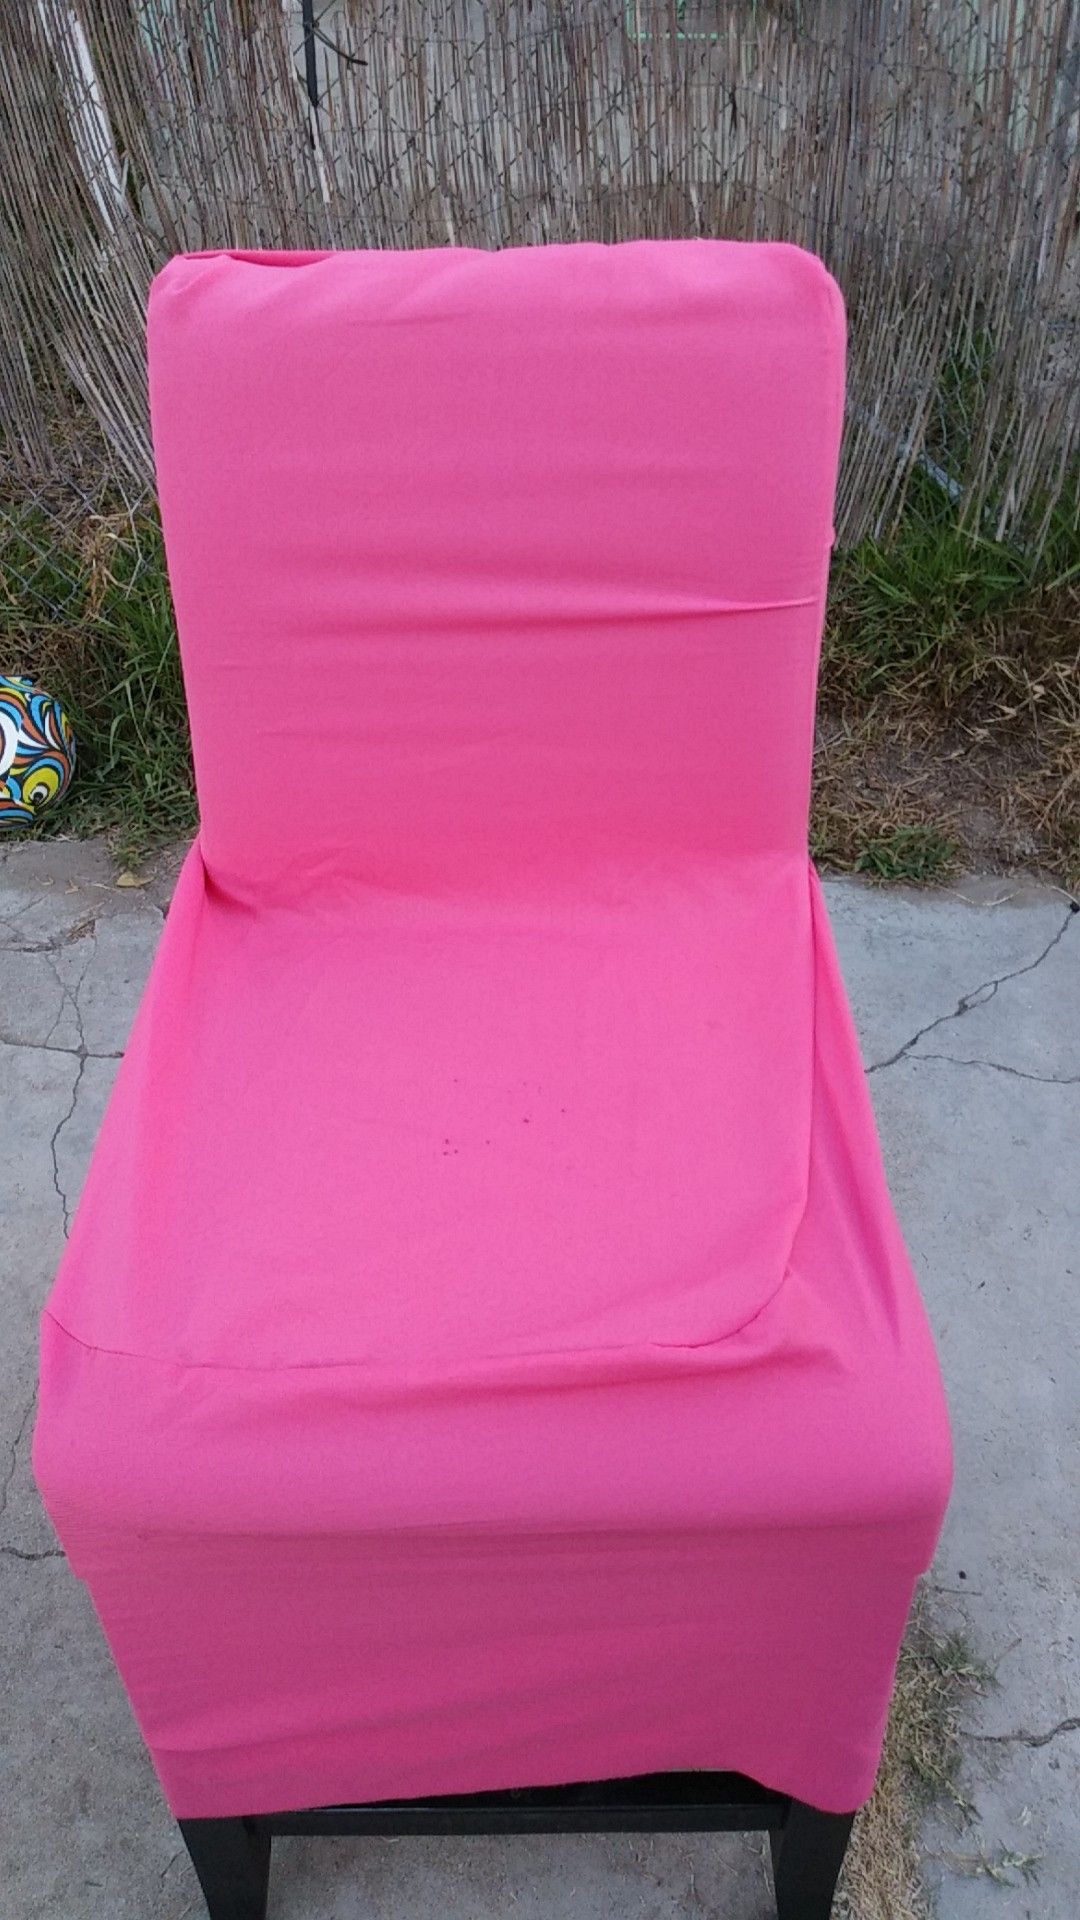 Chair covers/ cobertores de sillas